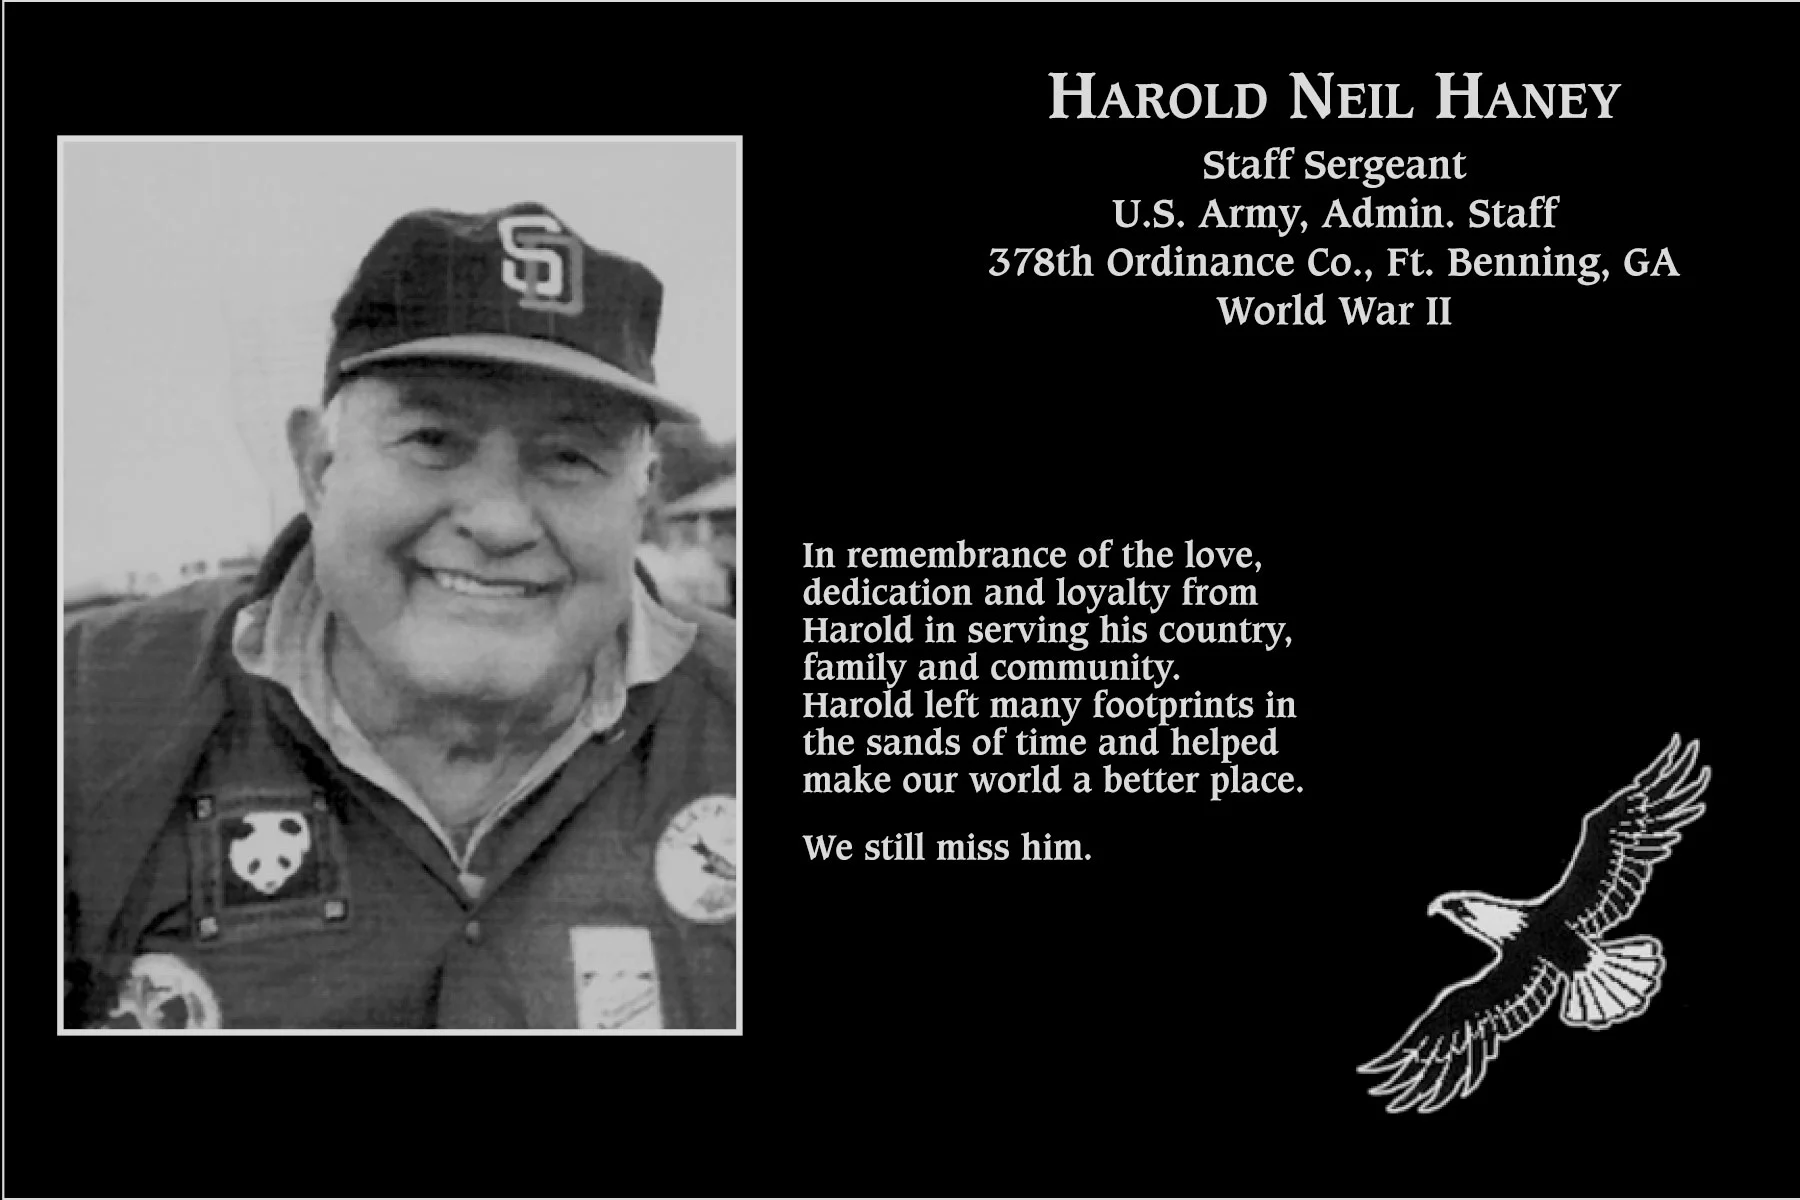 Harold Neil Haney